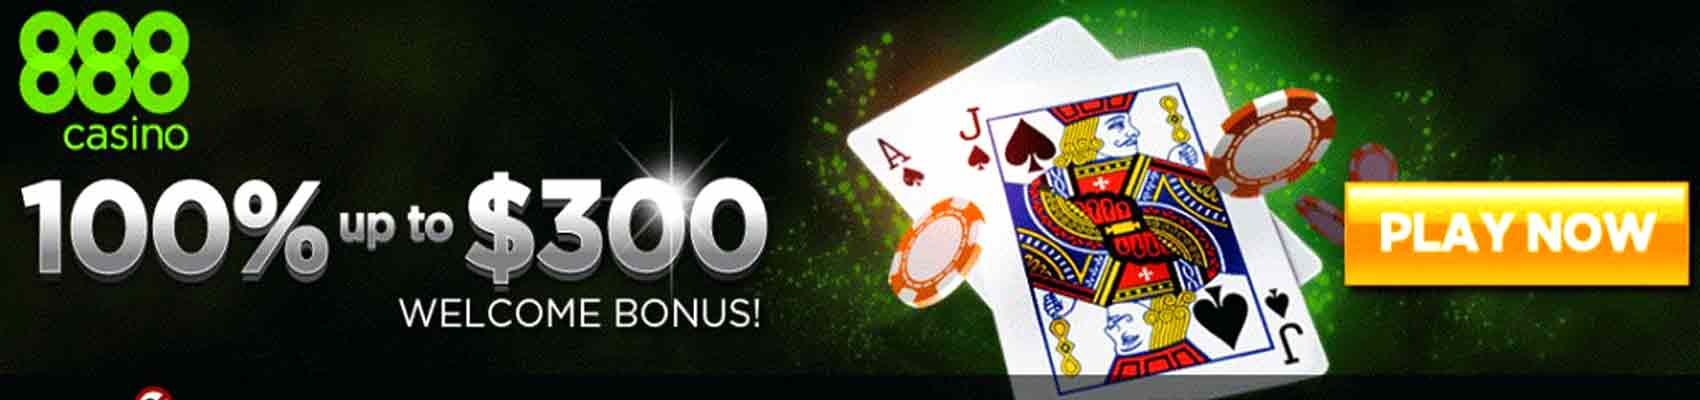 Arab 888 Casino 03